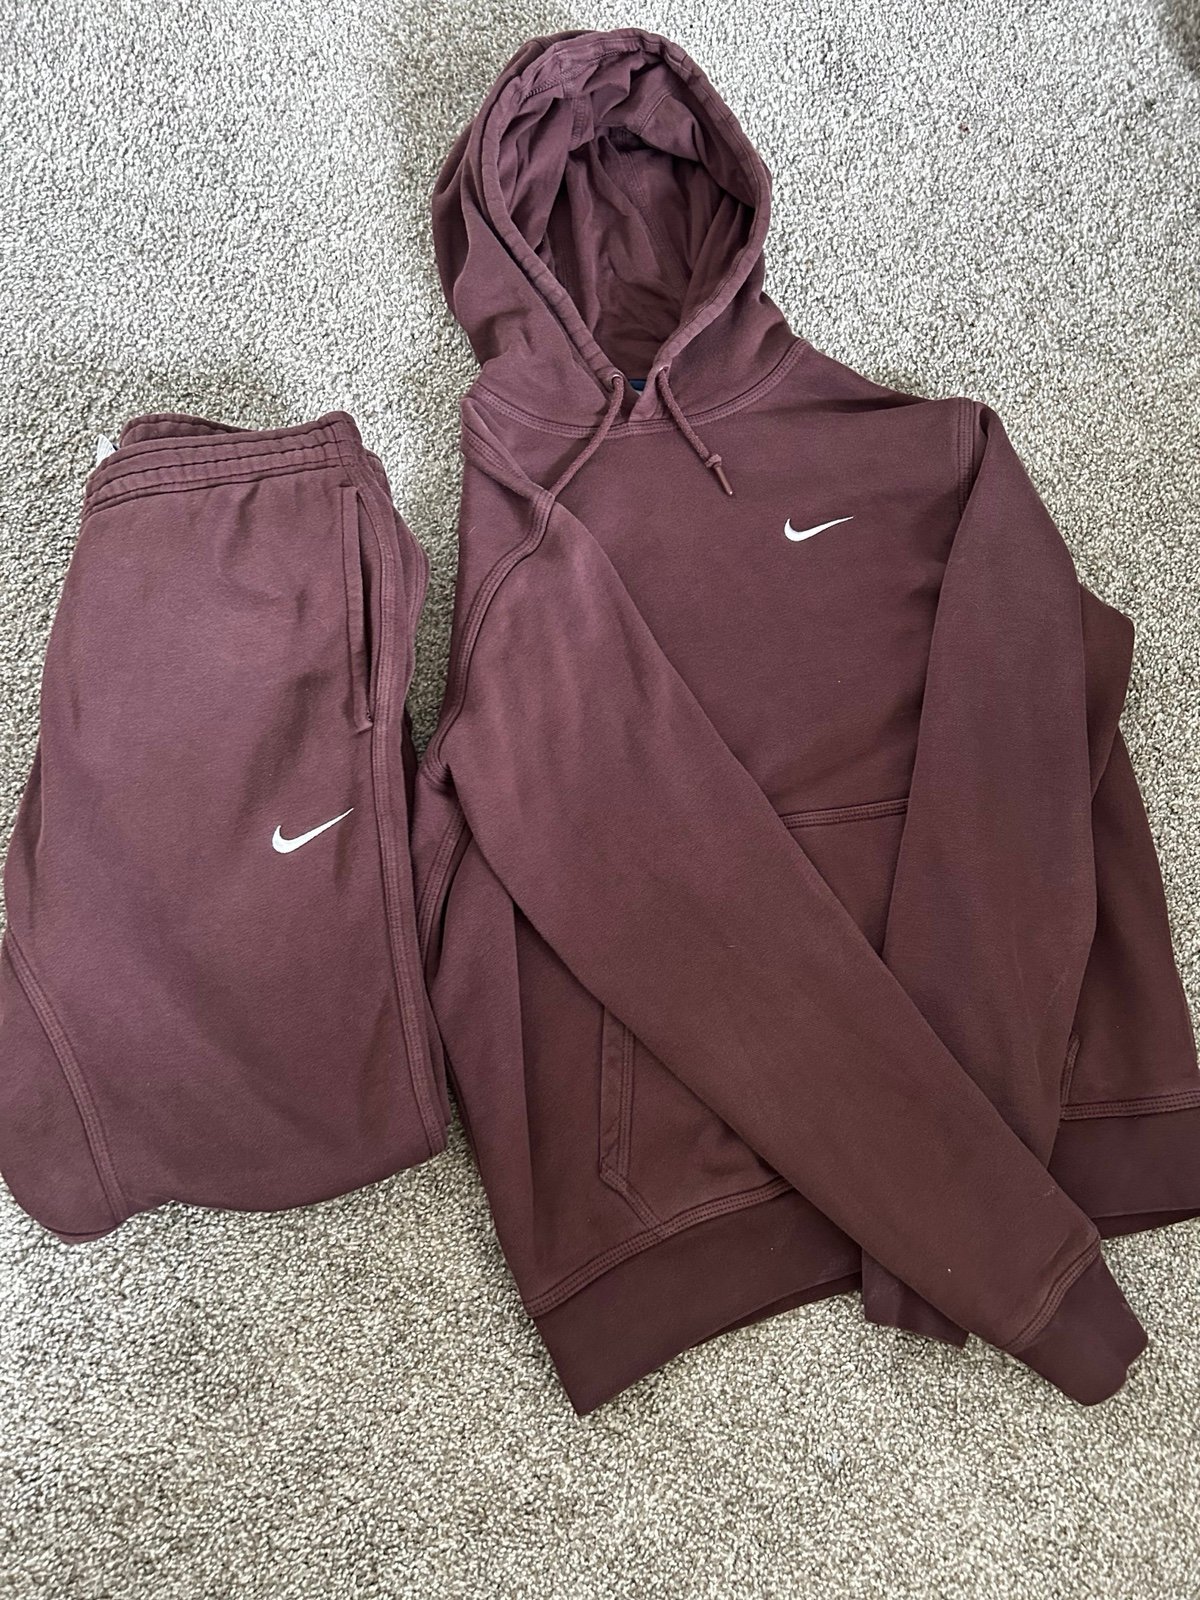 Nike sweat suit 34kqRtoc0